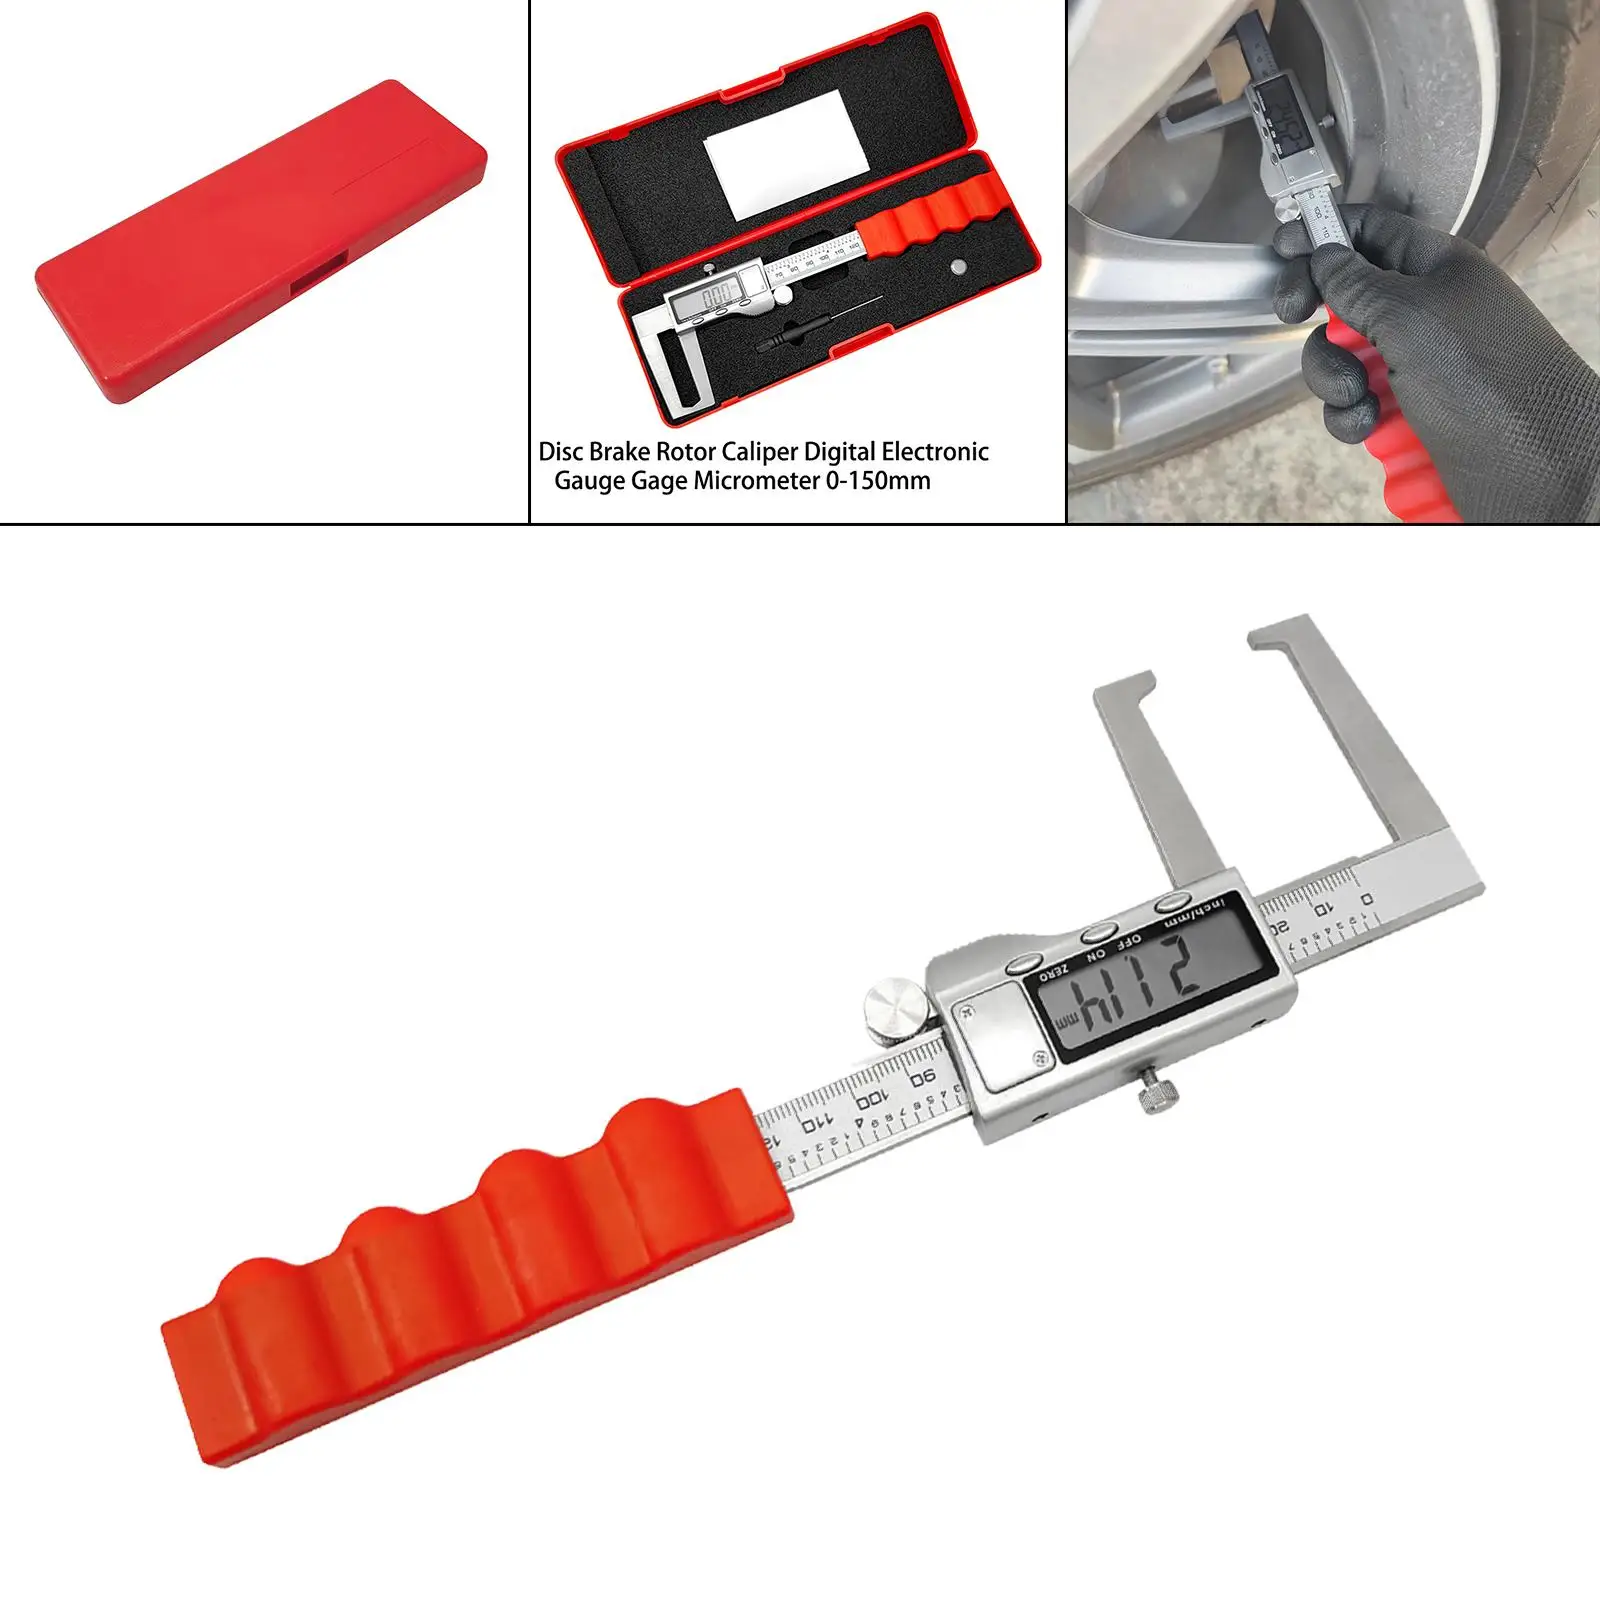 

Brake Discs Vernier Caliper Gauge Gage Measuring Tool Micrometer 0-150mm